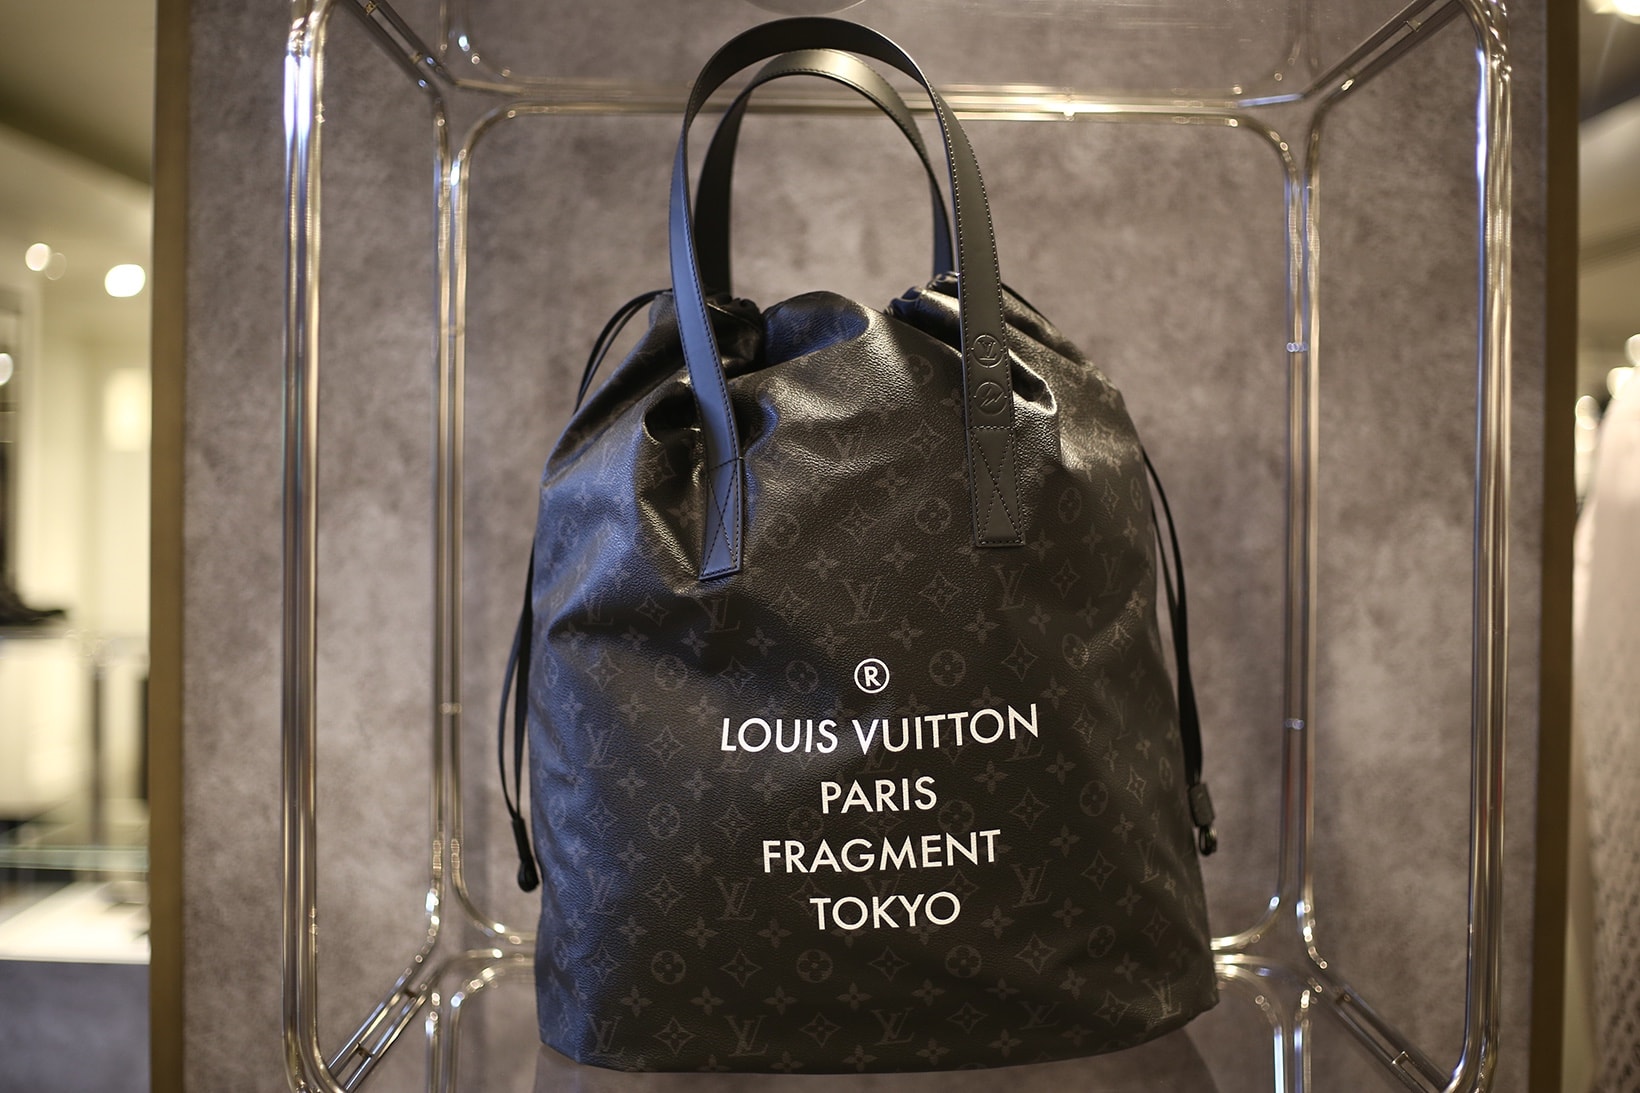 fragment design x Louis Vuitton Pop-Up London Harrods